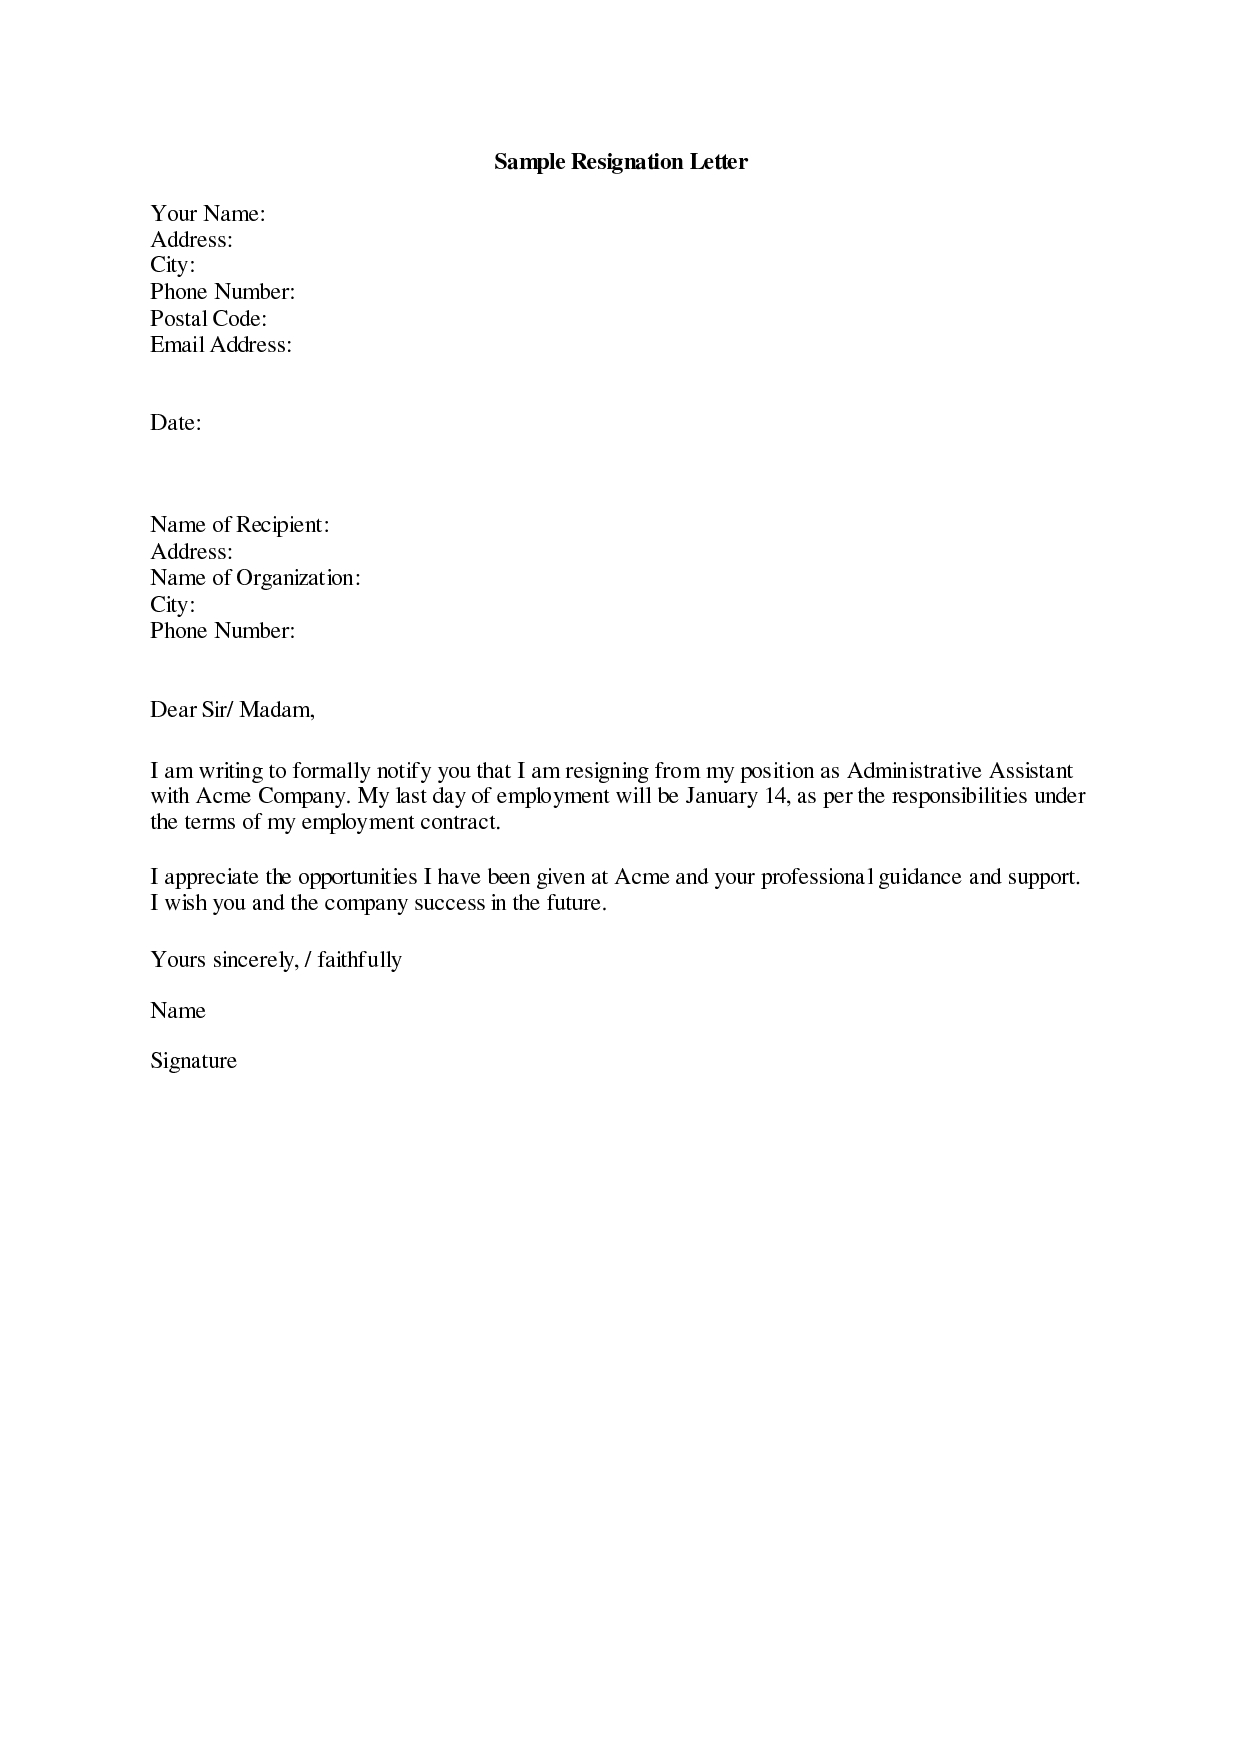 Standard Resignation Letter Template Word - Resignation Letter Sample 19 Letter Of Resignation